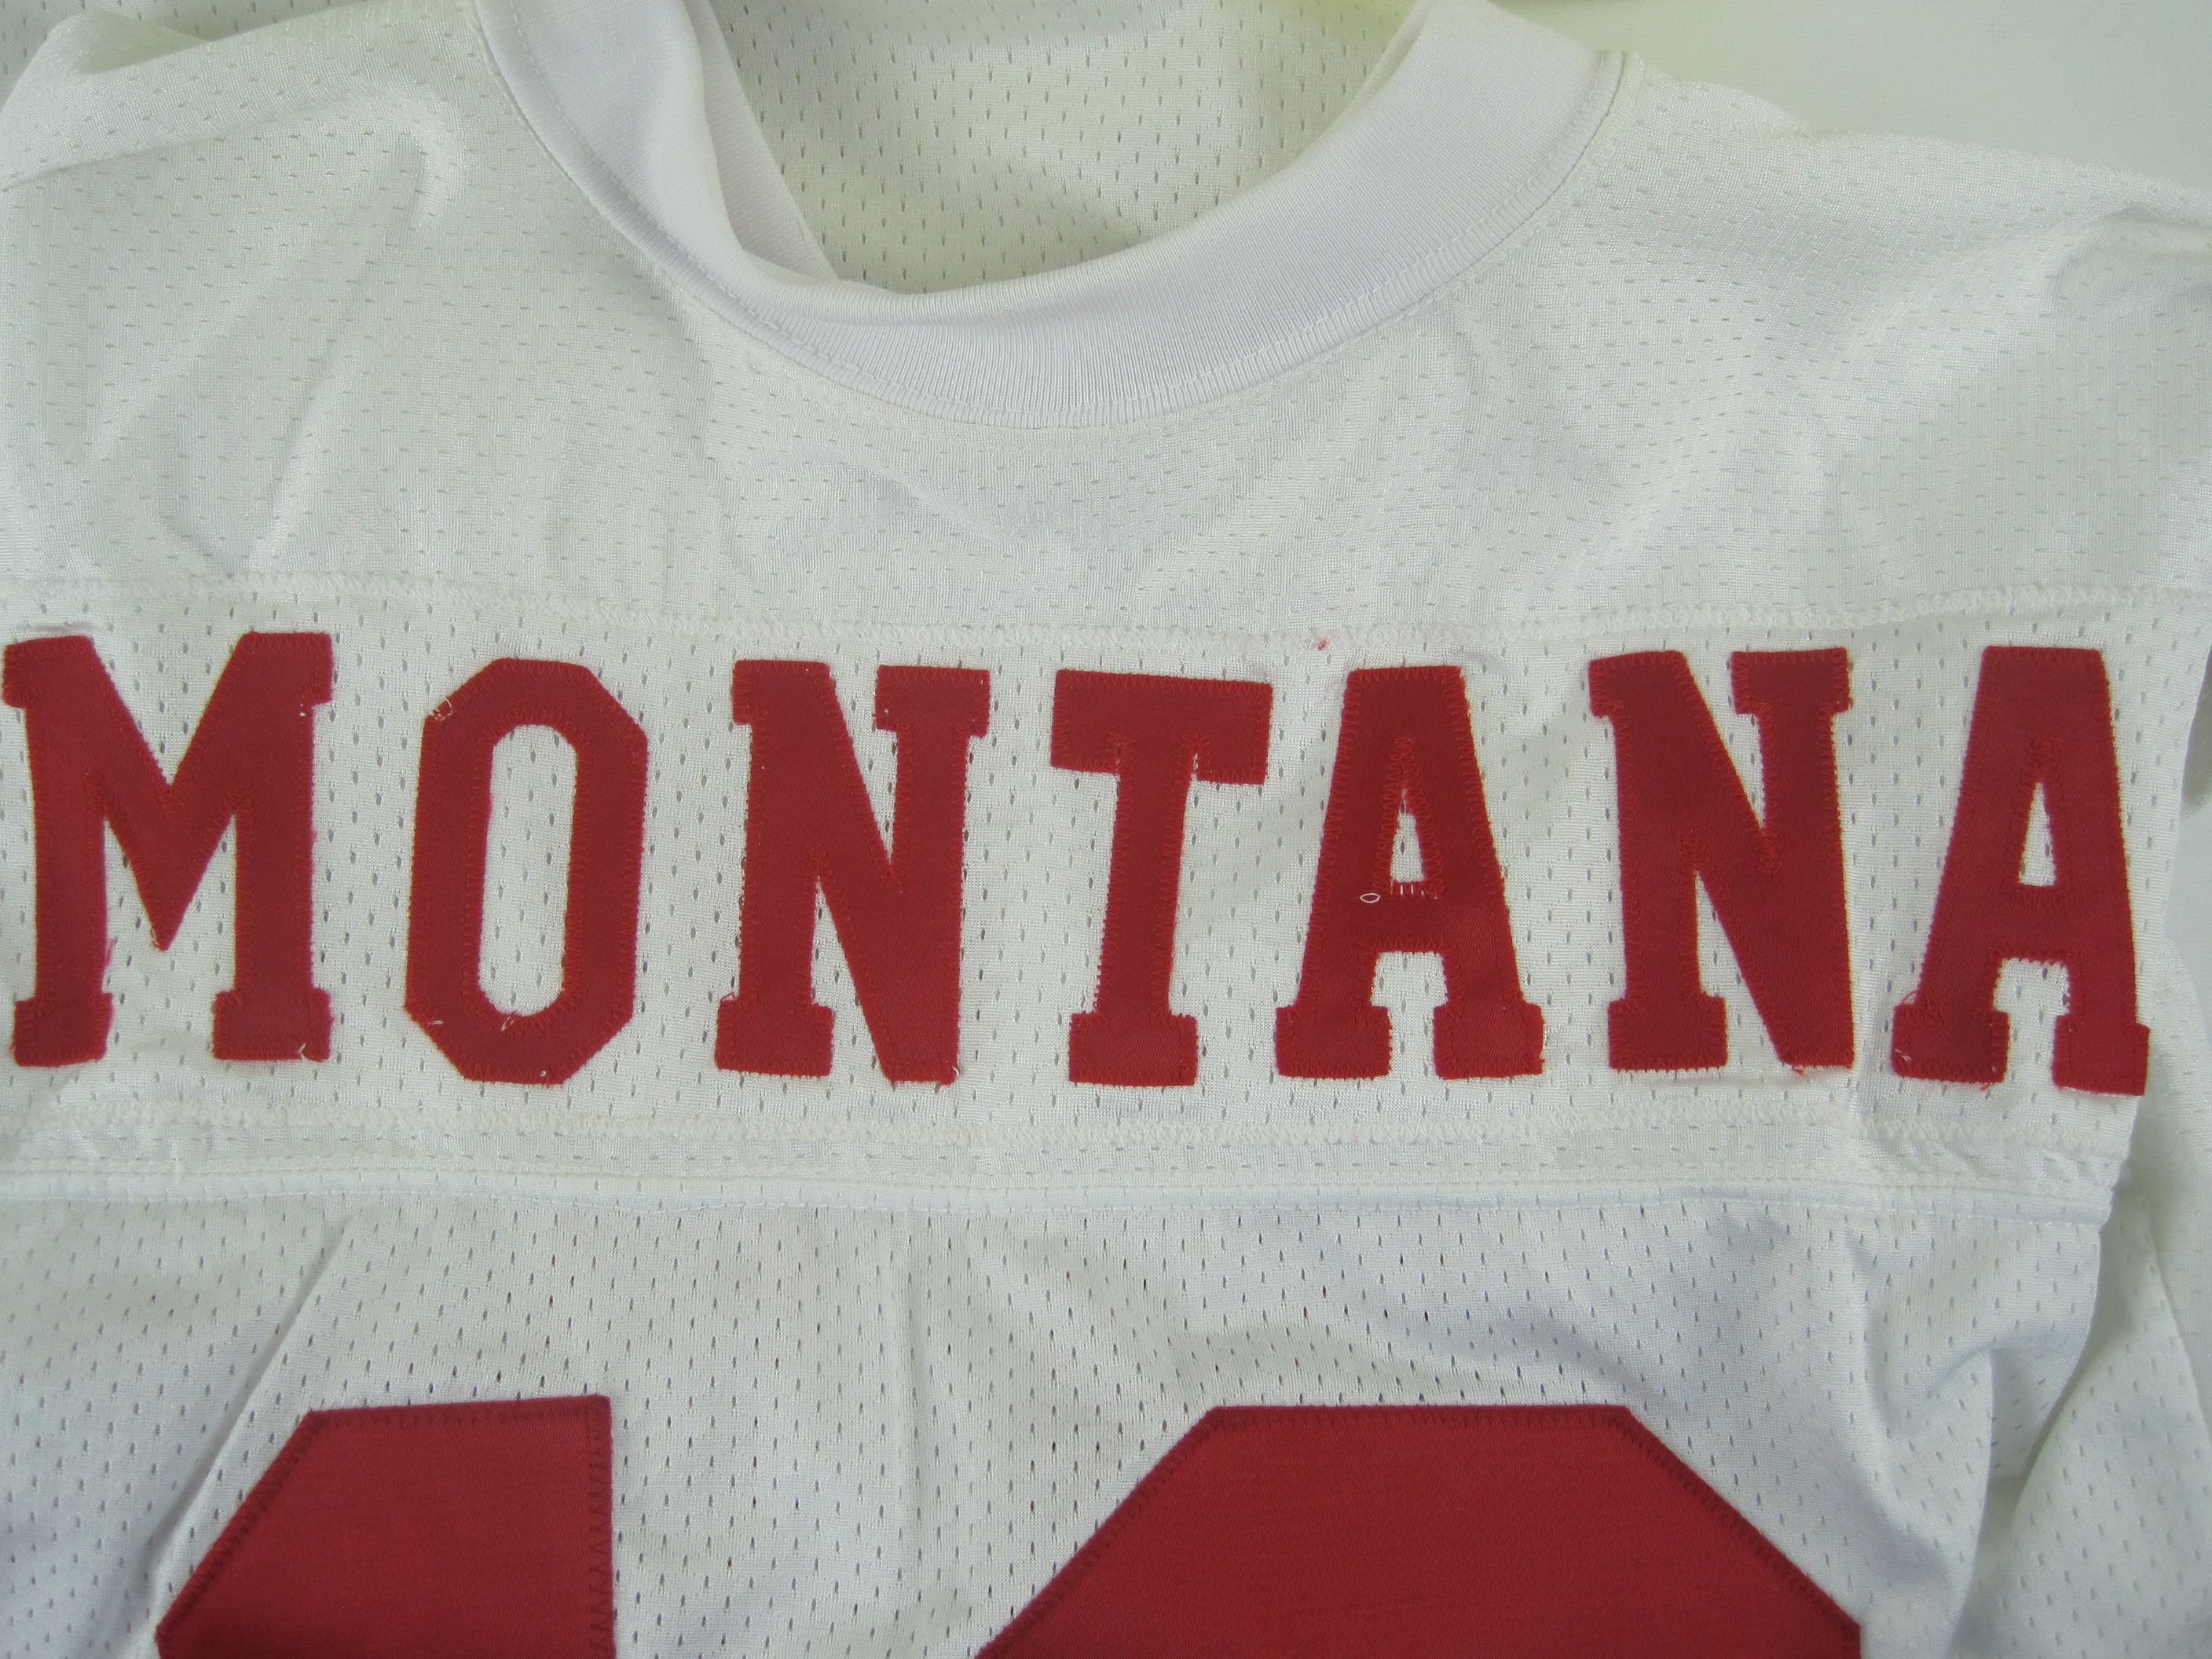 joe montana authentic jersey